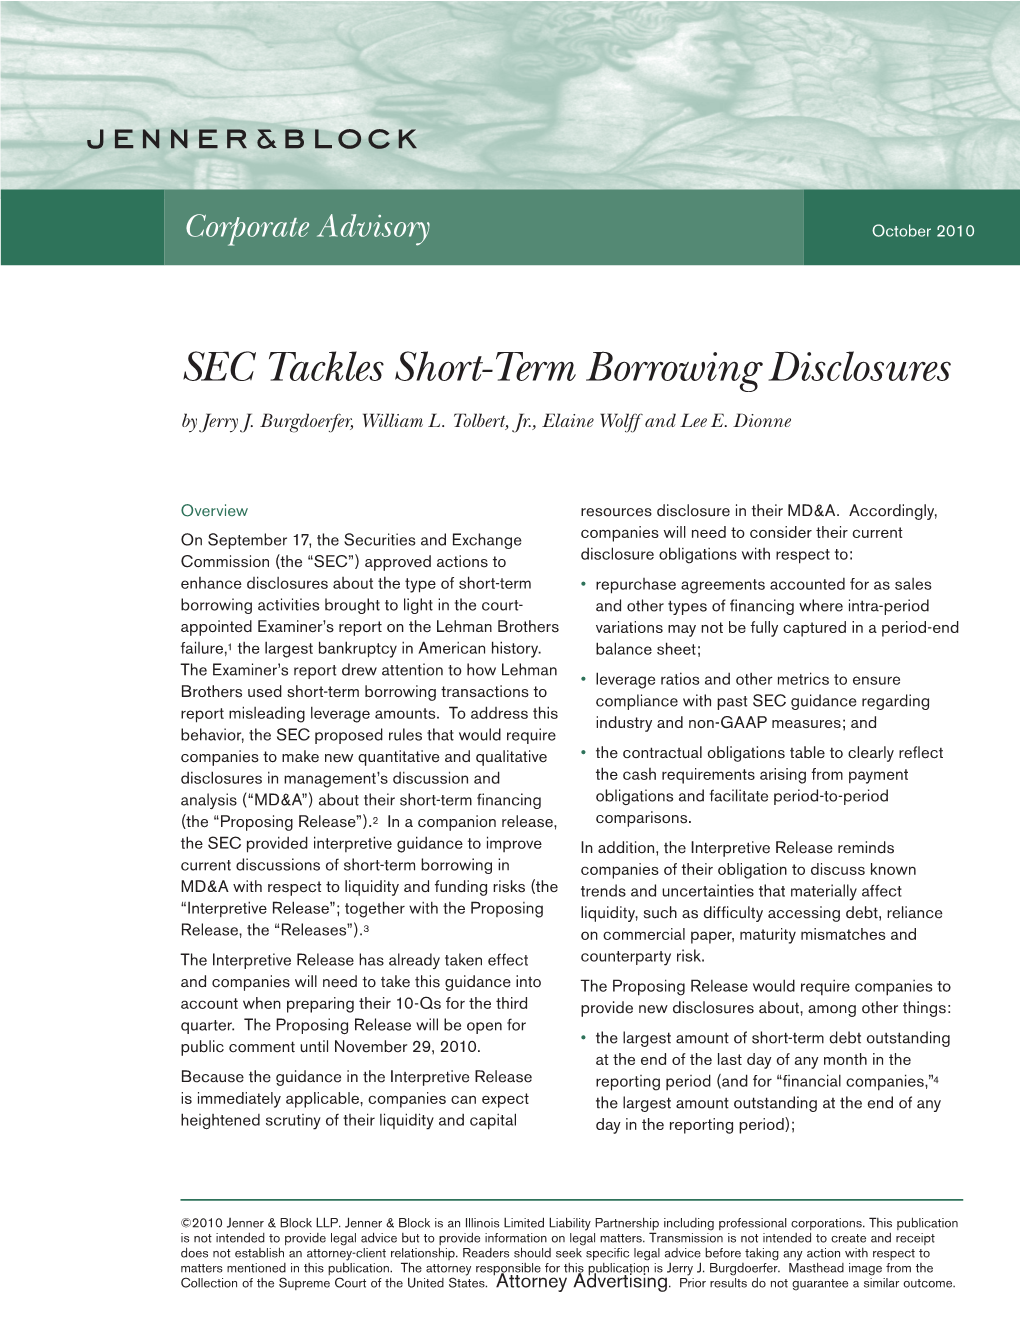 SEC Tackles Short-Term Borrowing Disclosures by Jerry J